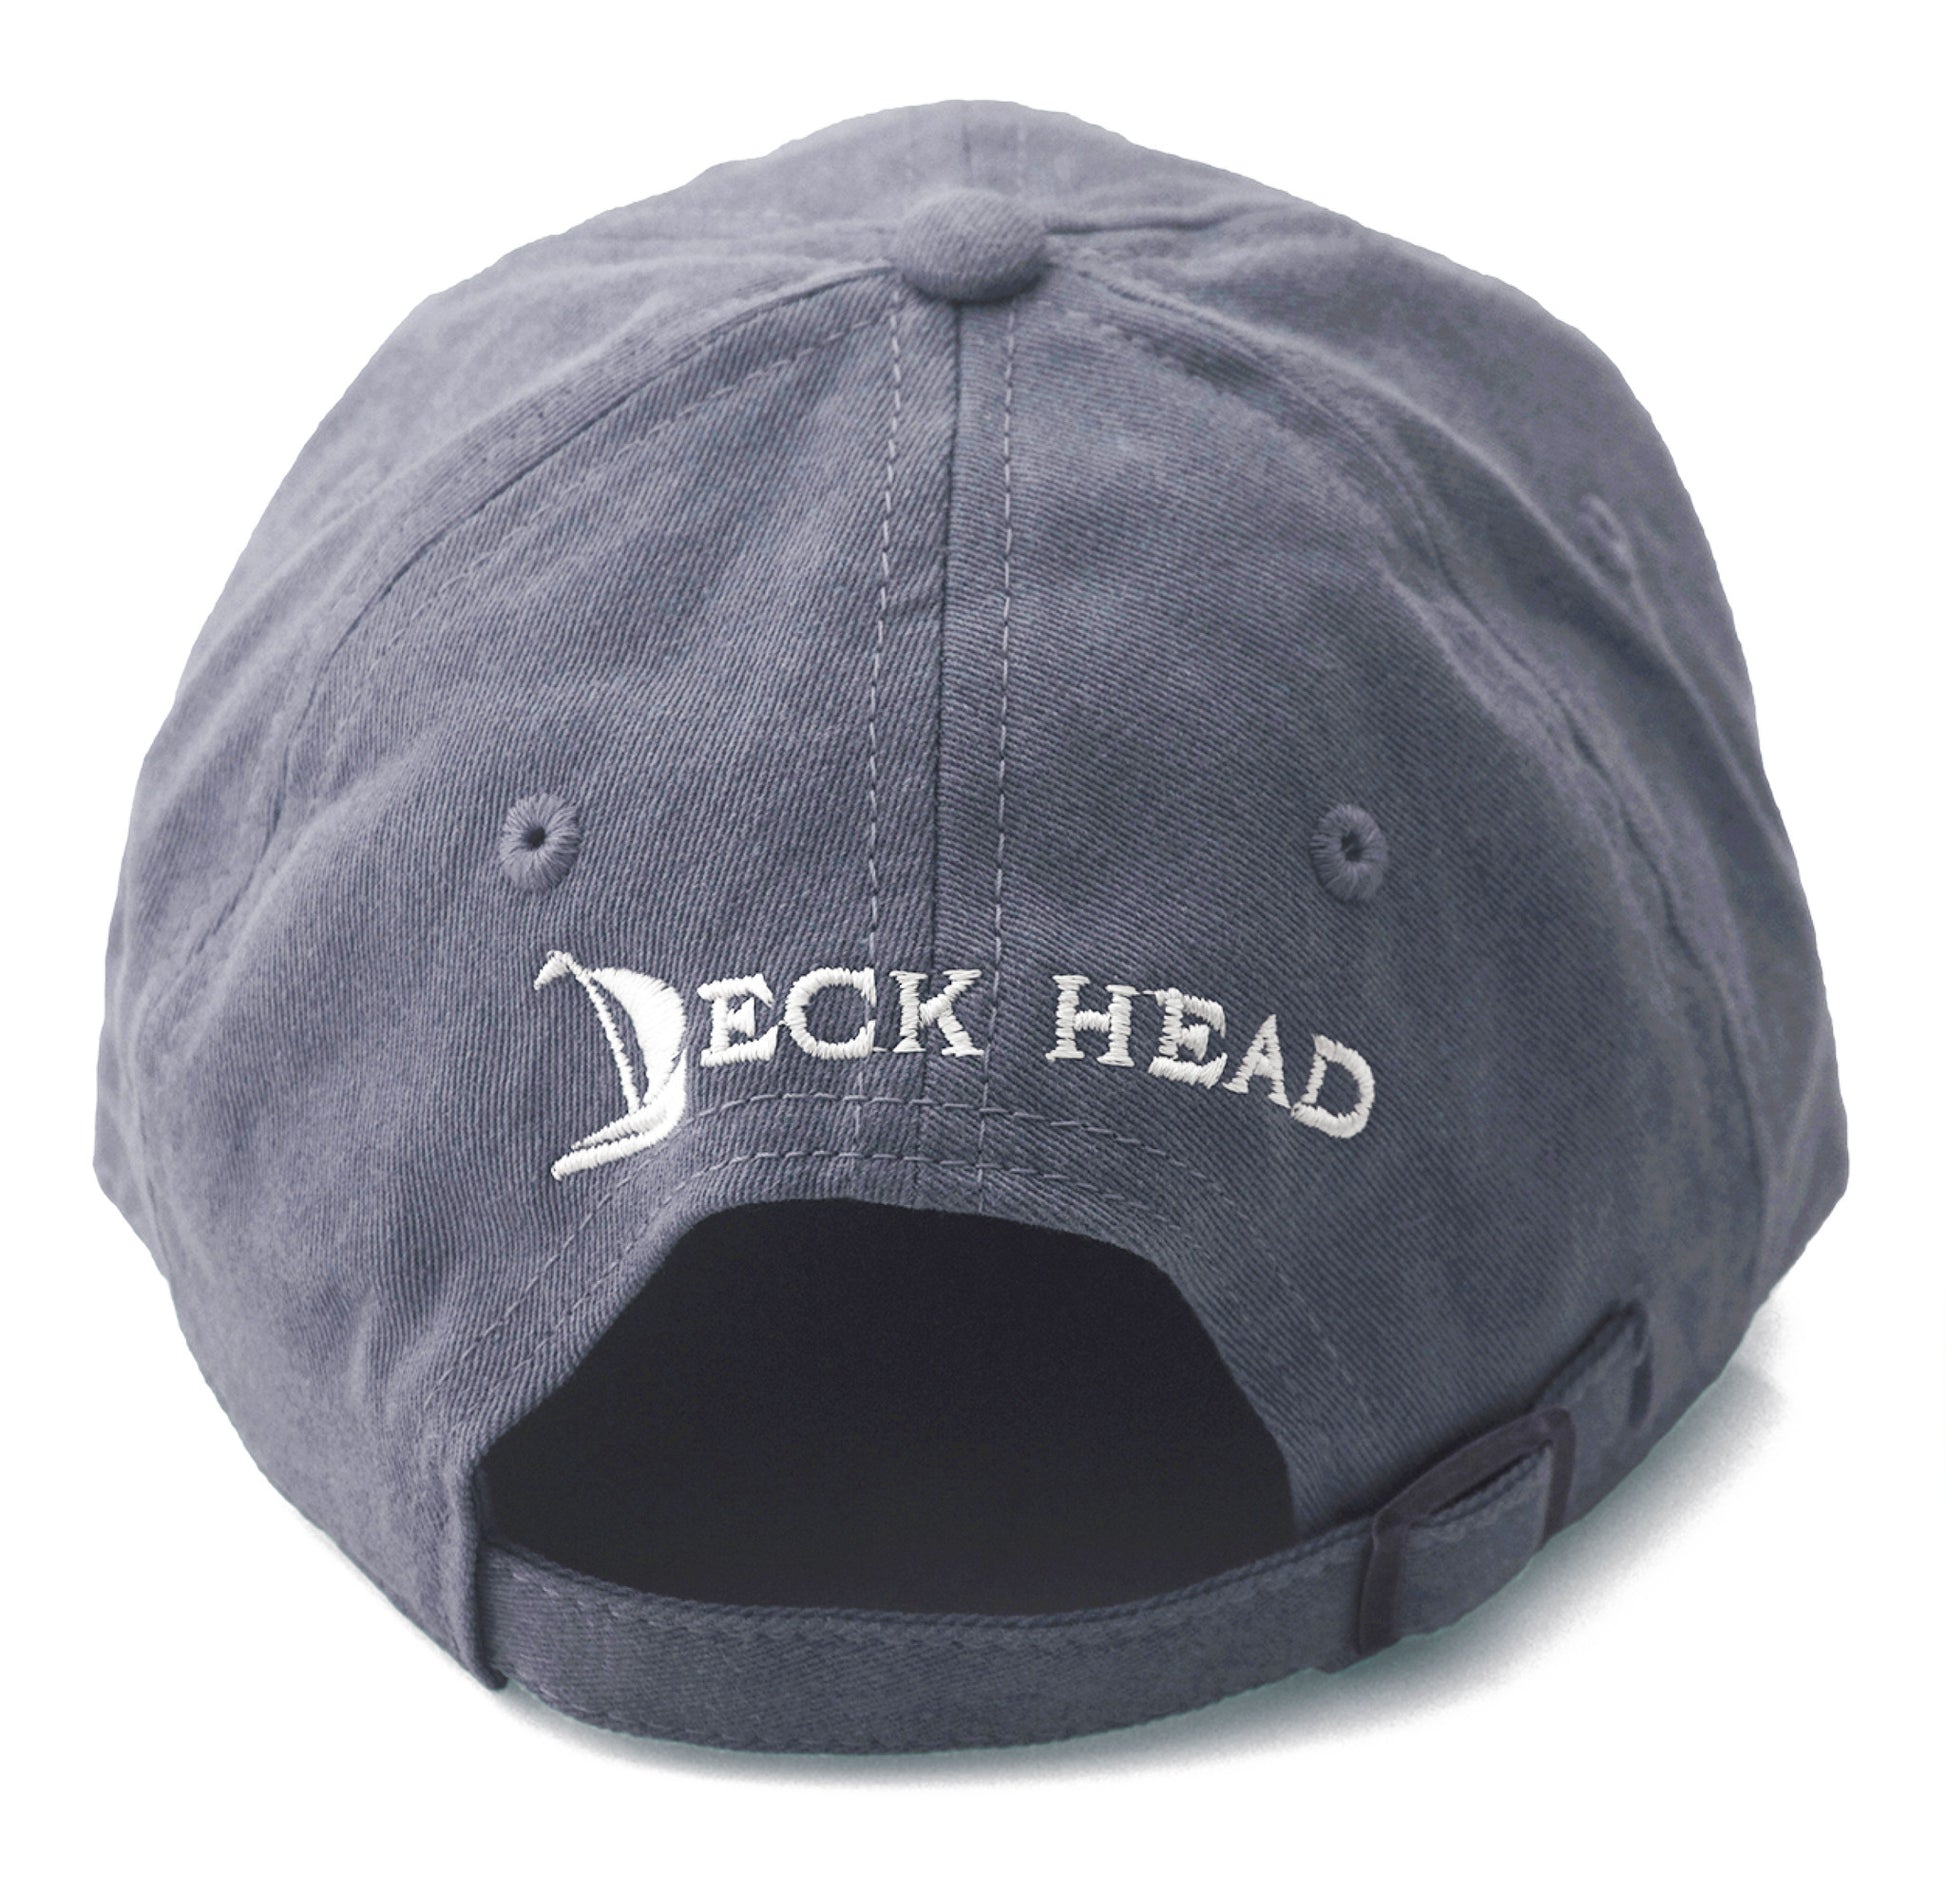 Deck Head - Blue